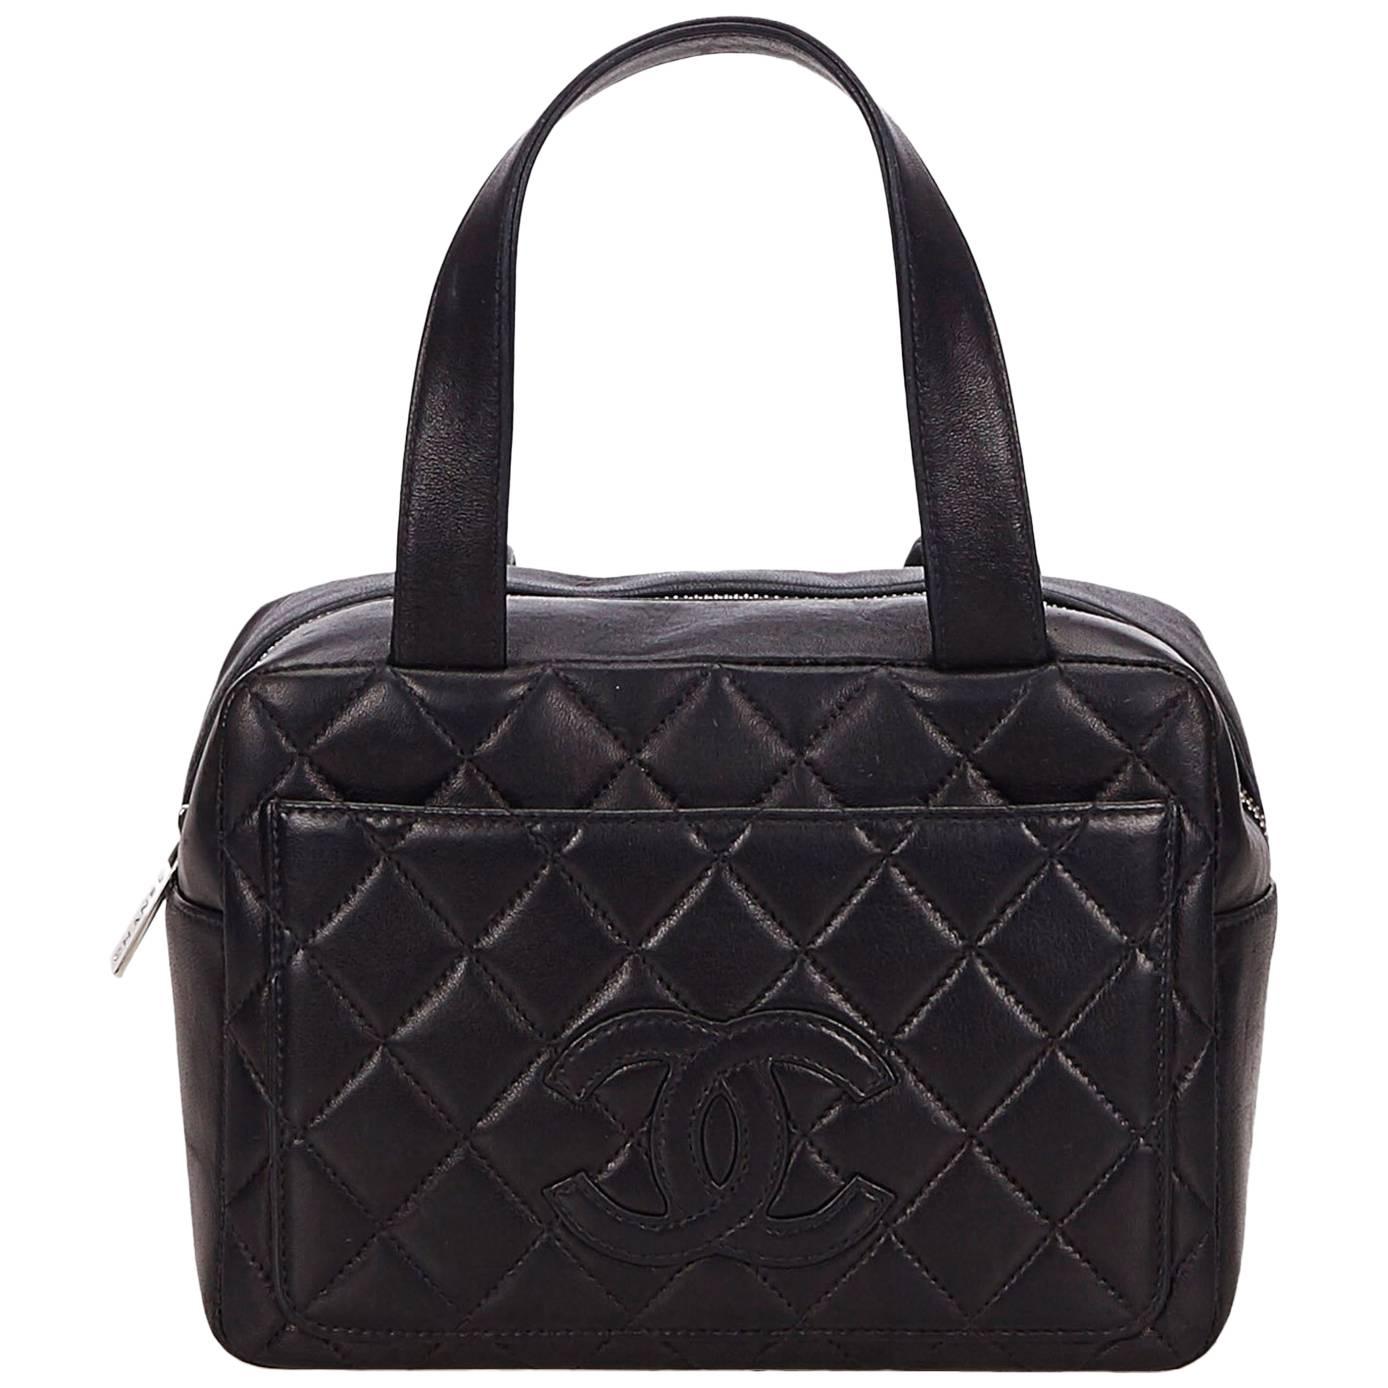 Chanel Black Matelasse Lambskin Leather Handbag For Sale